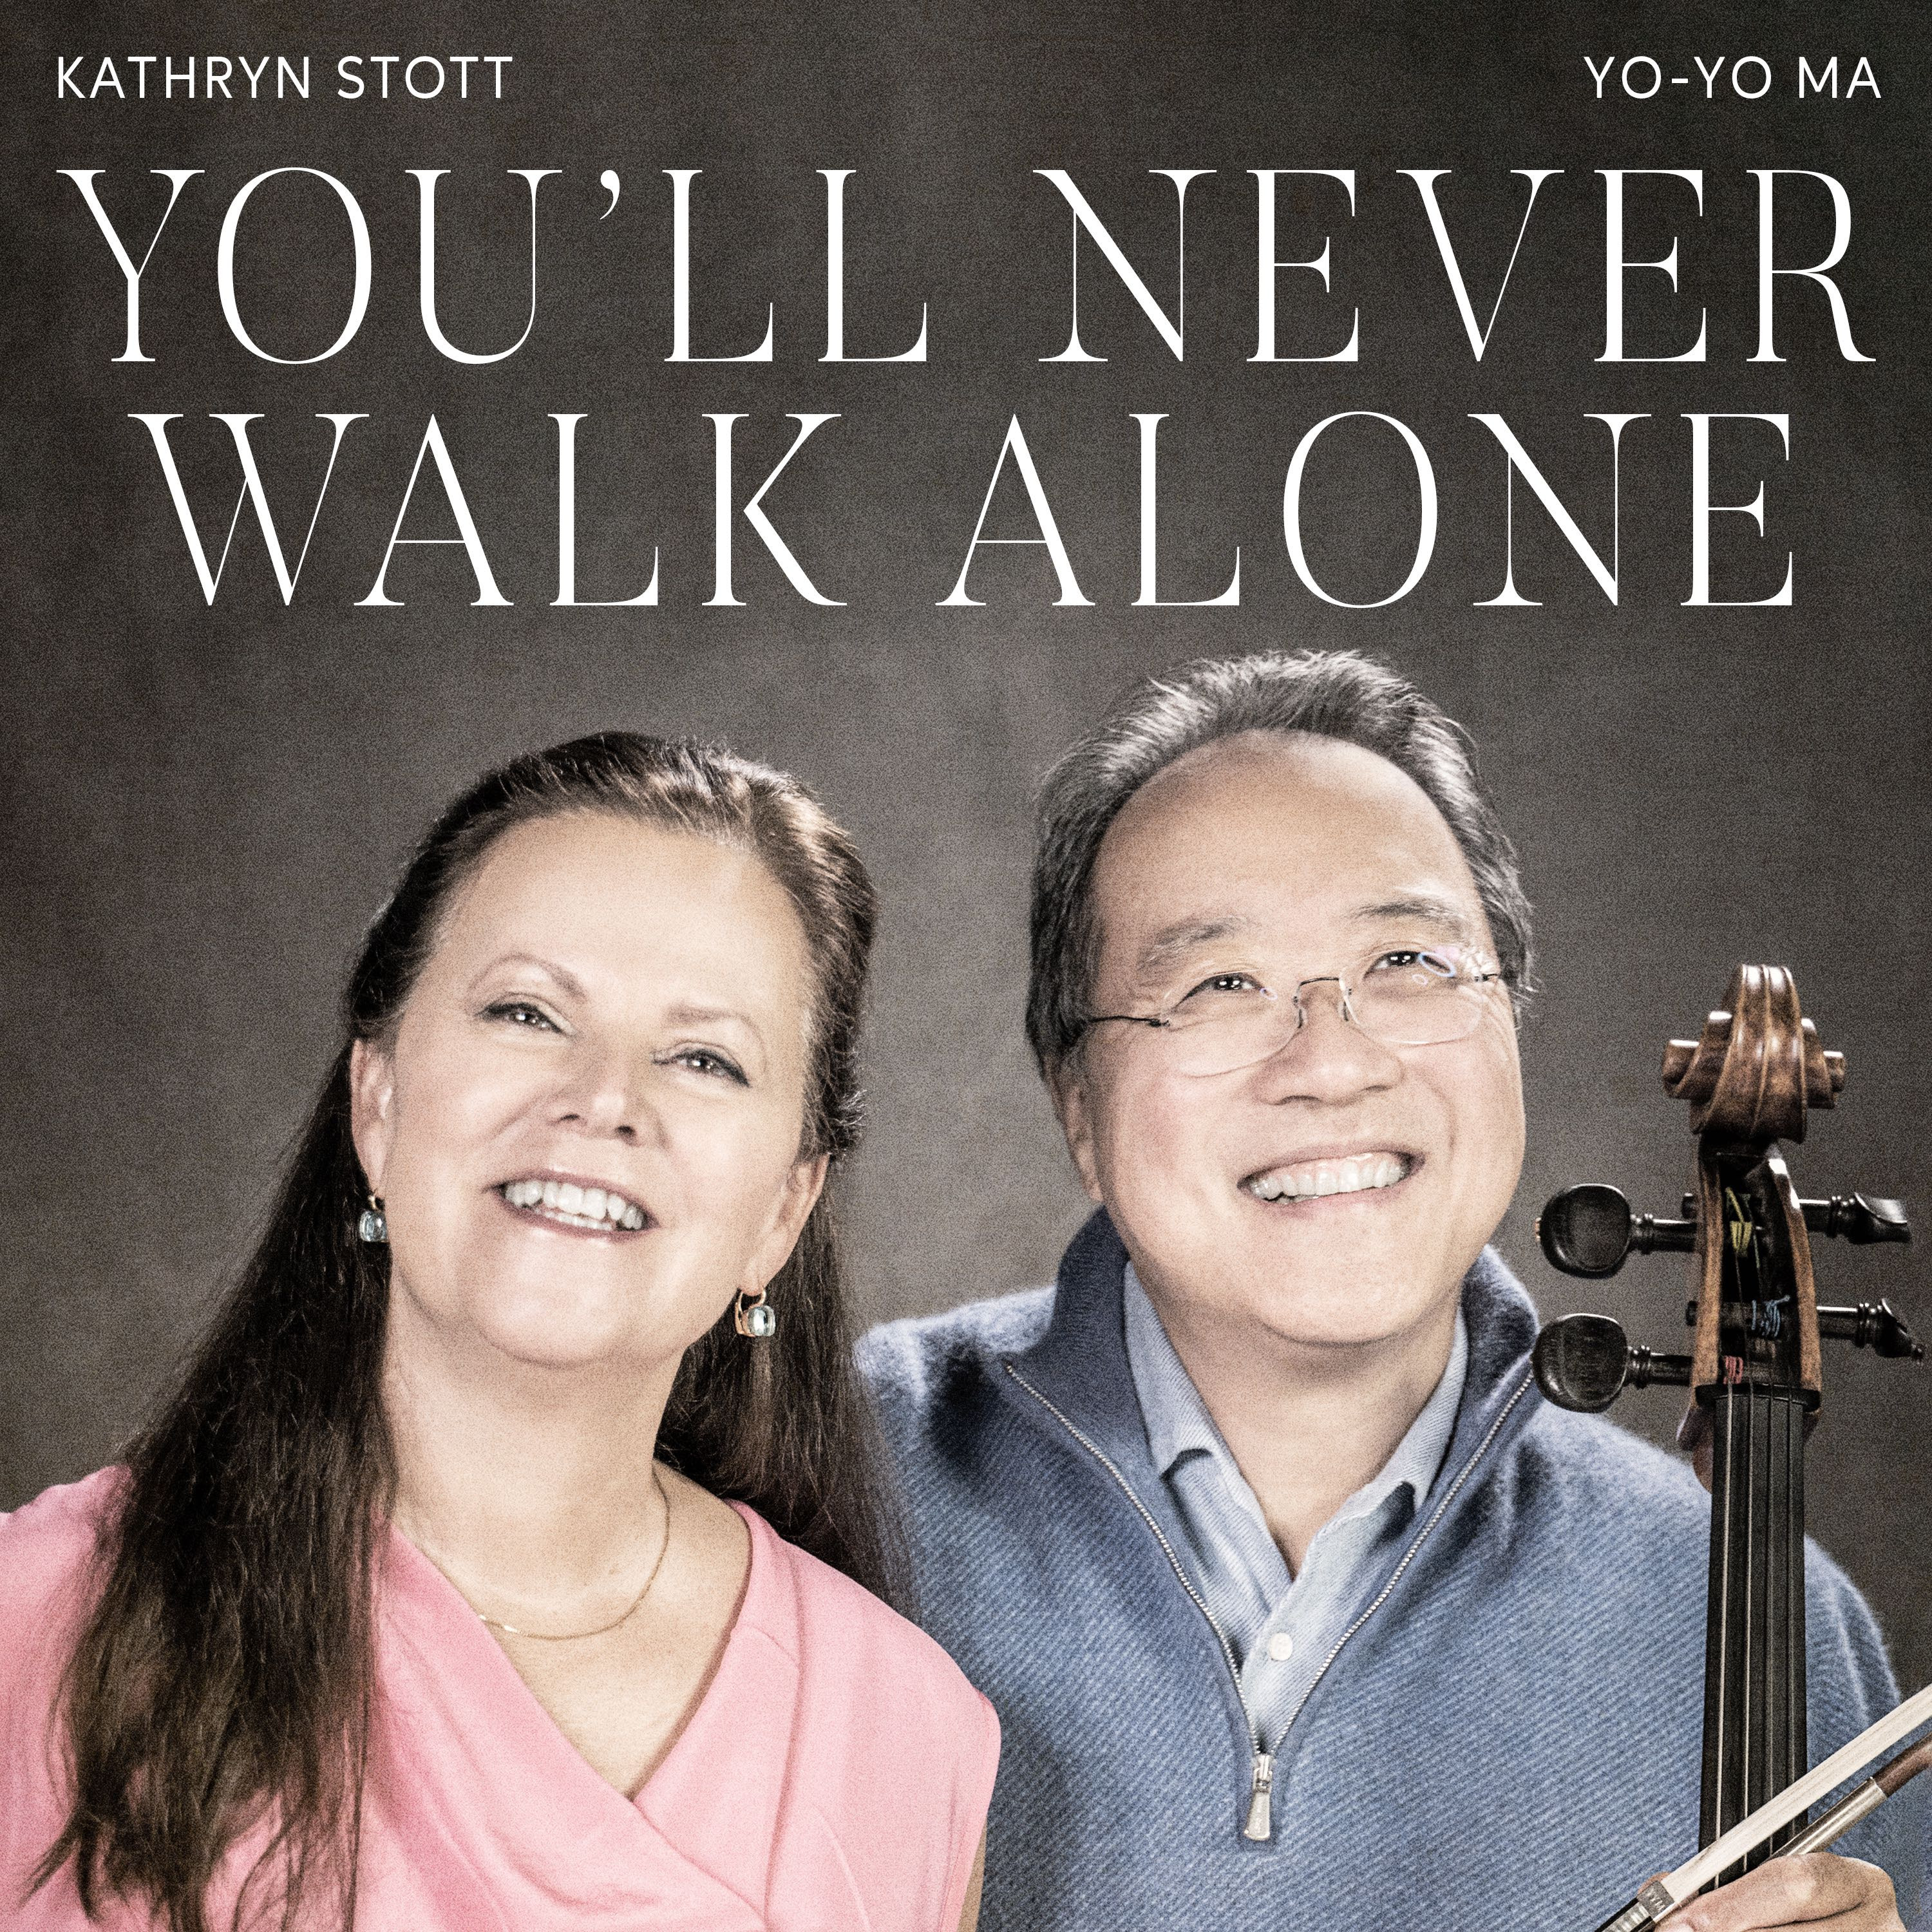 YYM_KS - You'll Never Walk Alone - single cover copy.jpg